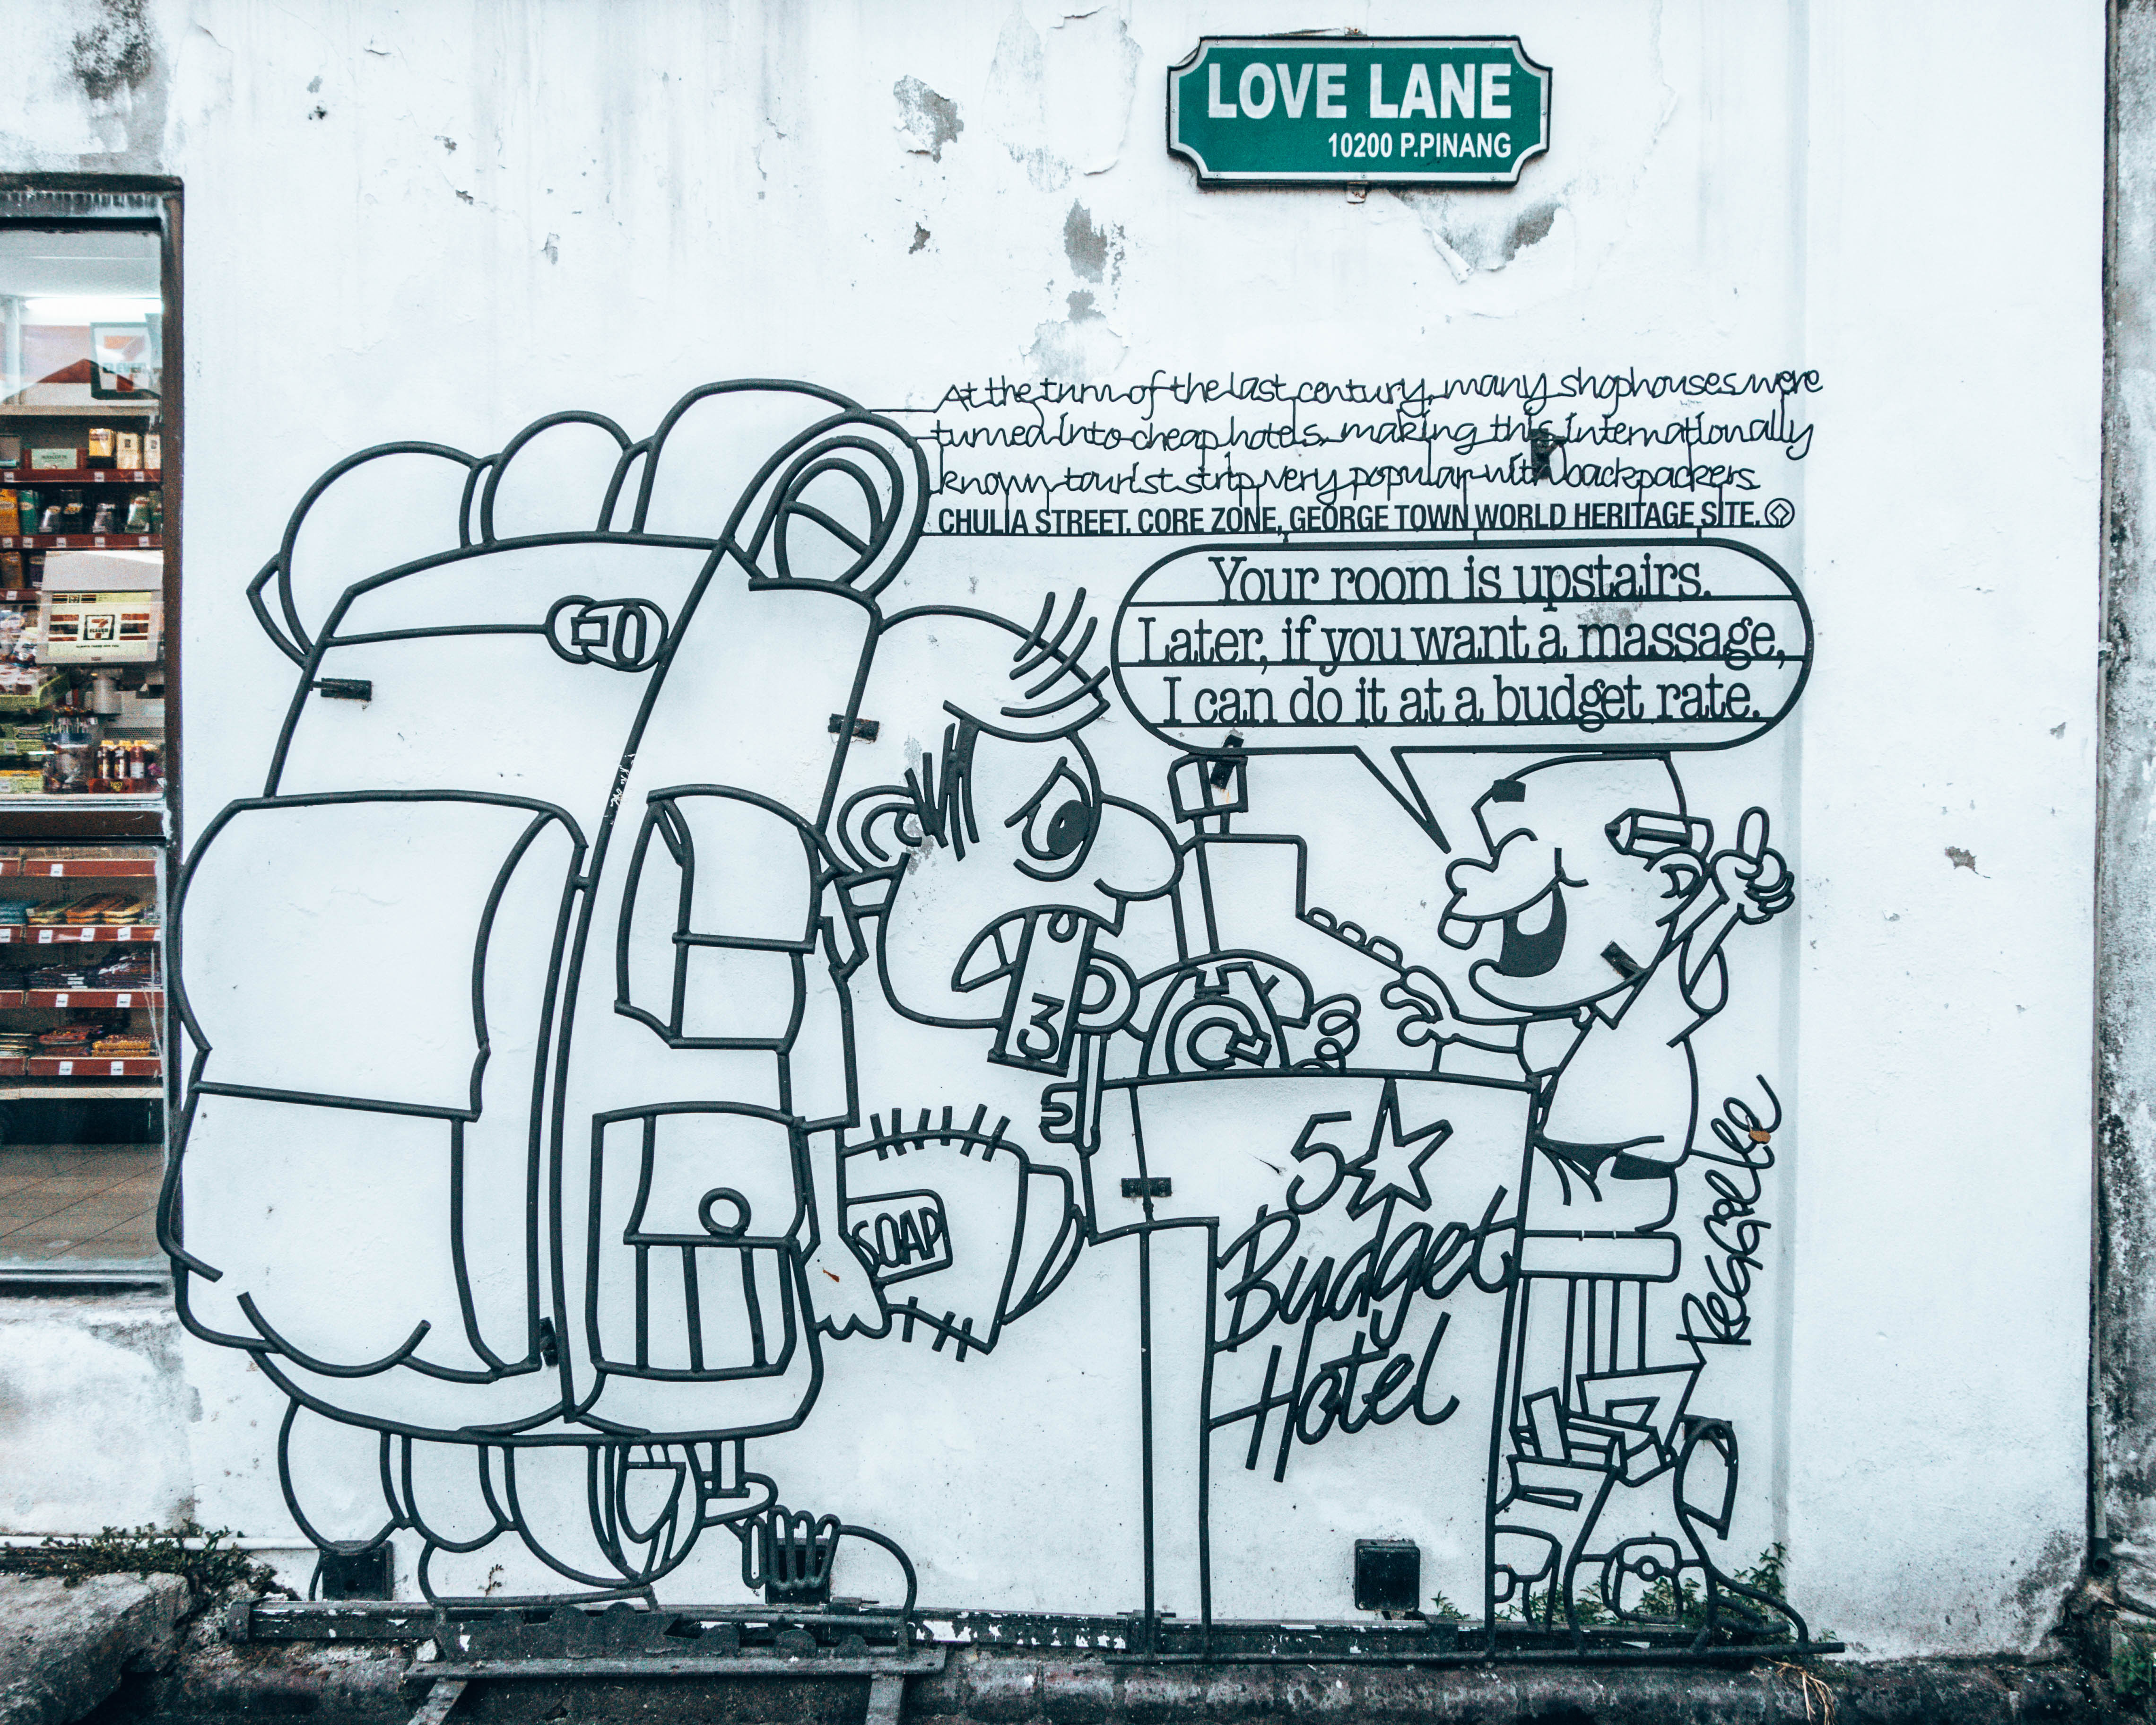 Love lane - Voice of the people by Tang Mun Kian. Street art in Penang, Georgetown, Malaysia - Wediditourway.com